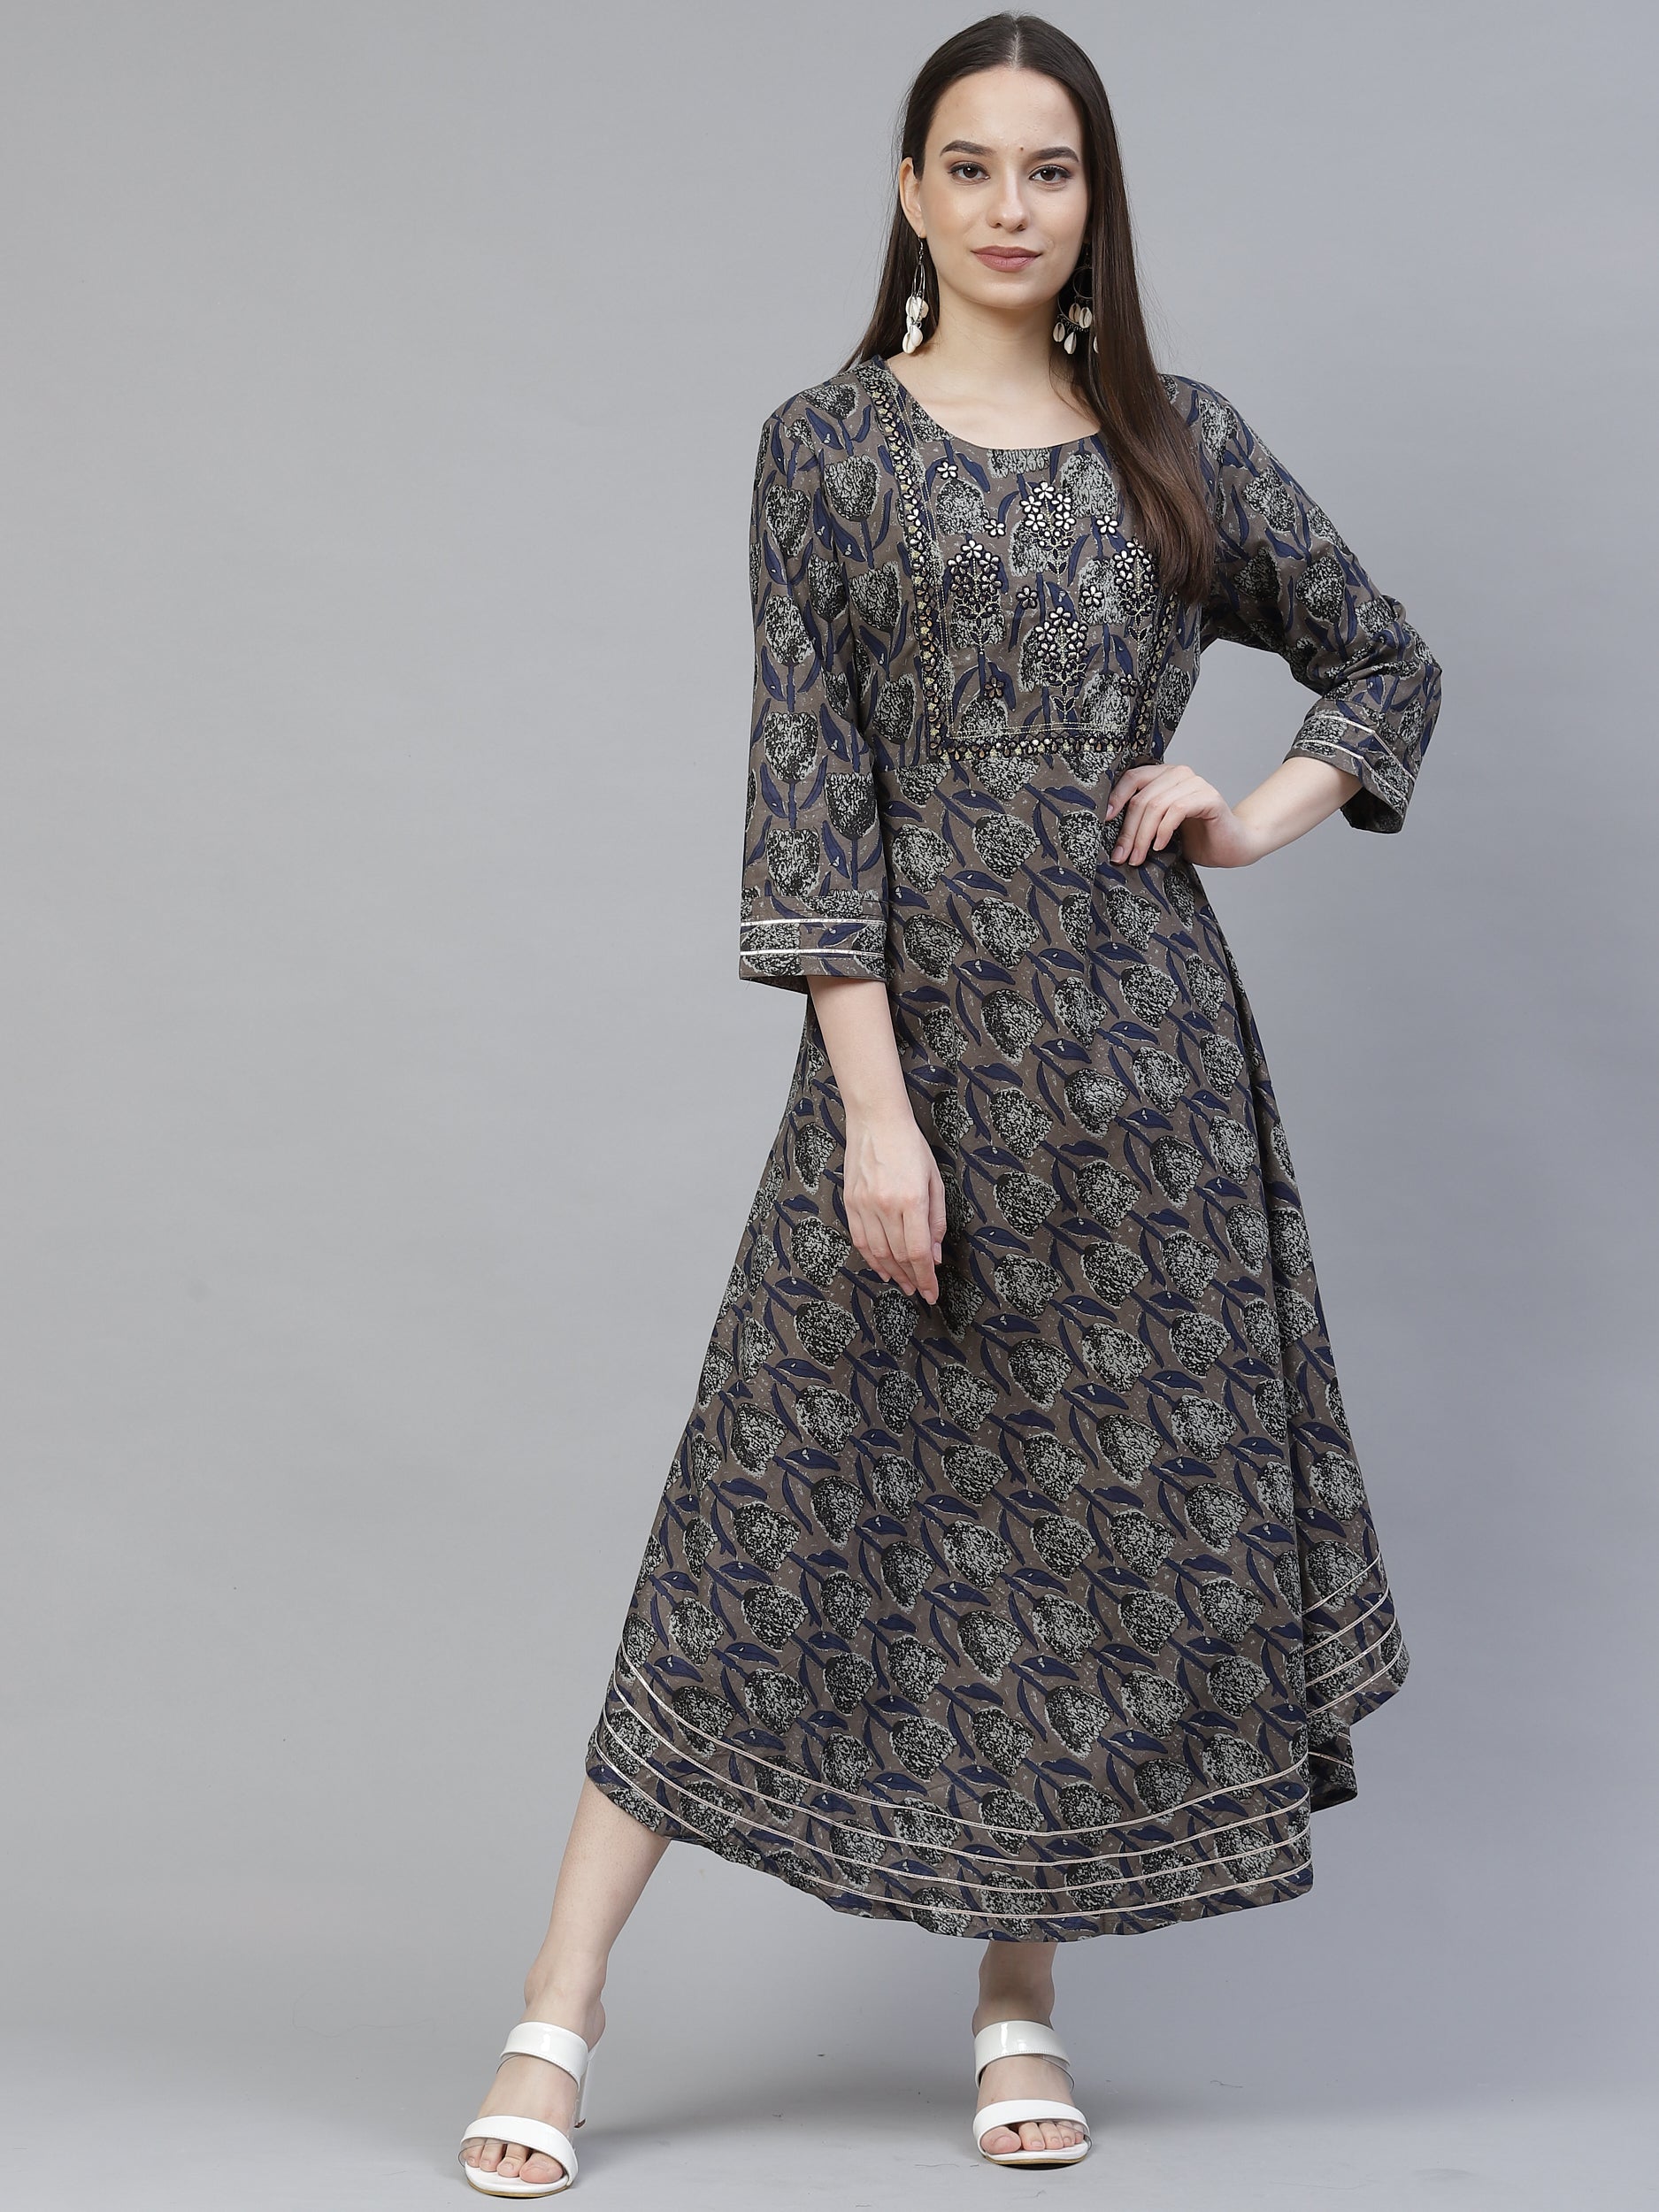 Women's grey & navy blue embroidered a-line dress - Meeranshi